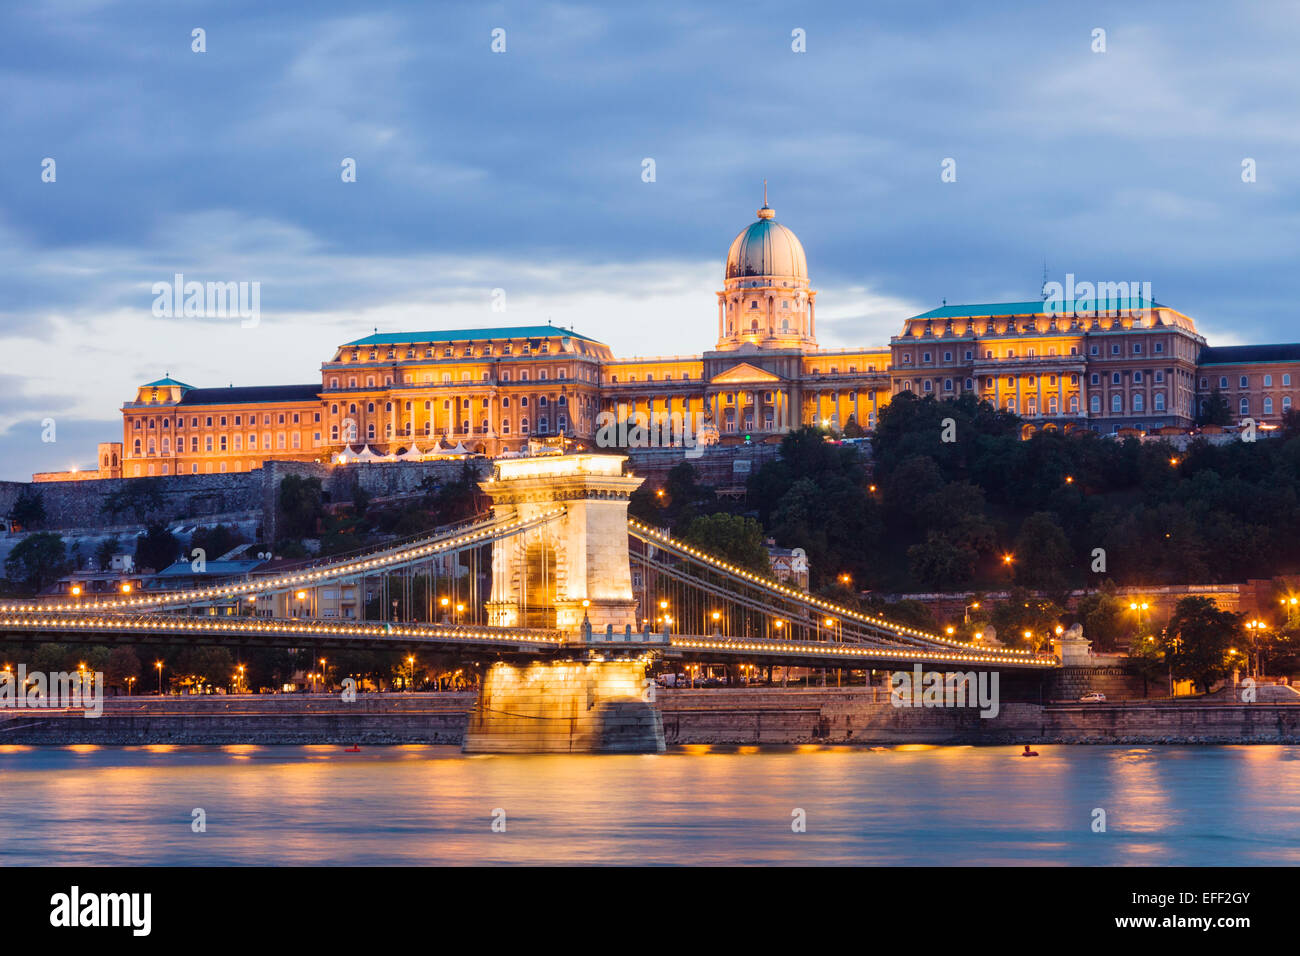 Royal Palace (18th c) and Chain Bridge at night. Budapest, Hungary Stock Photo